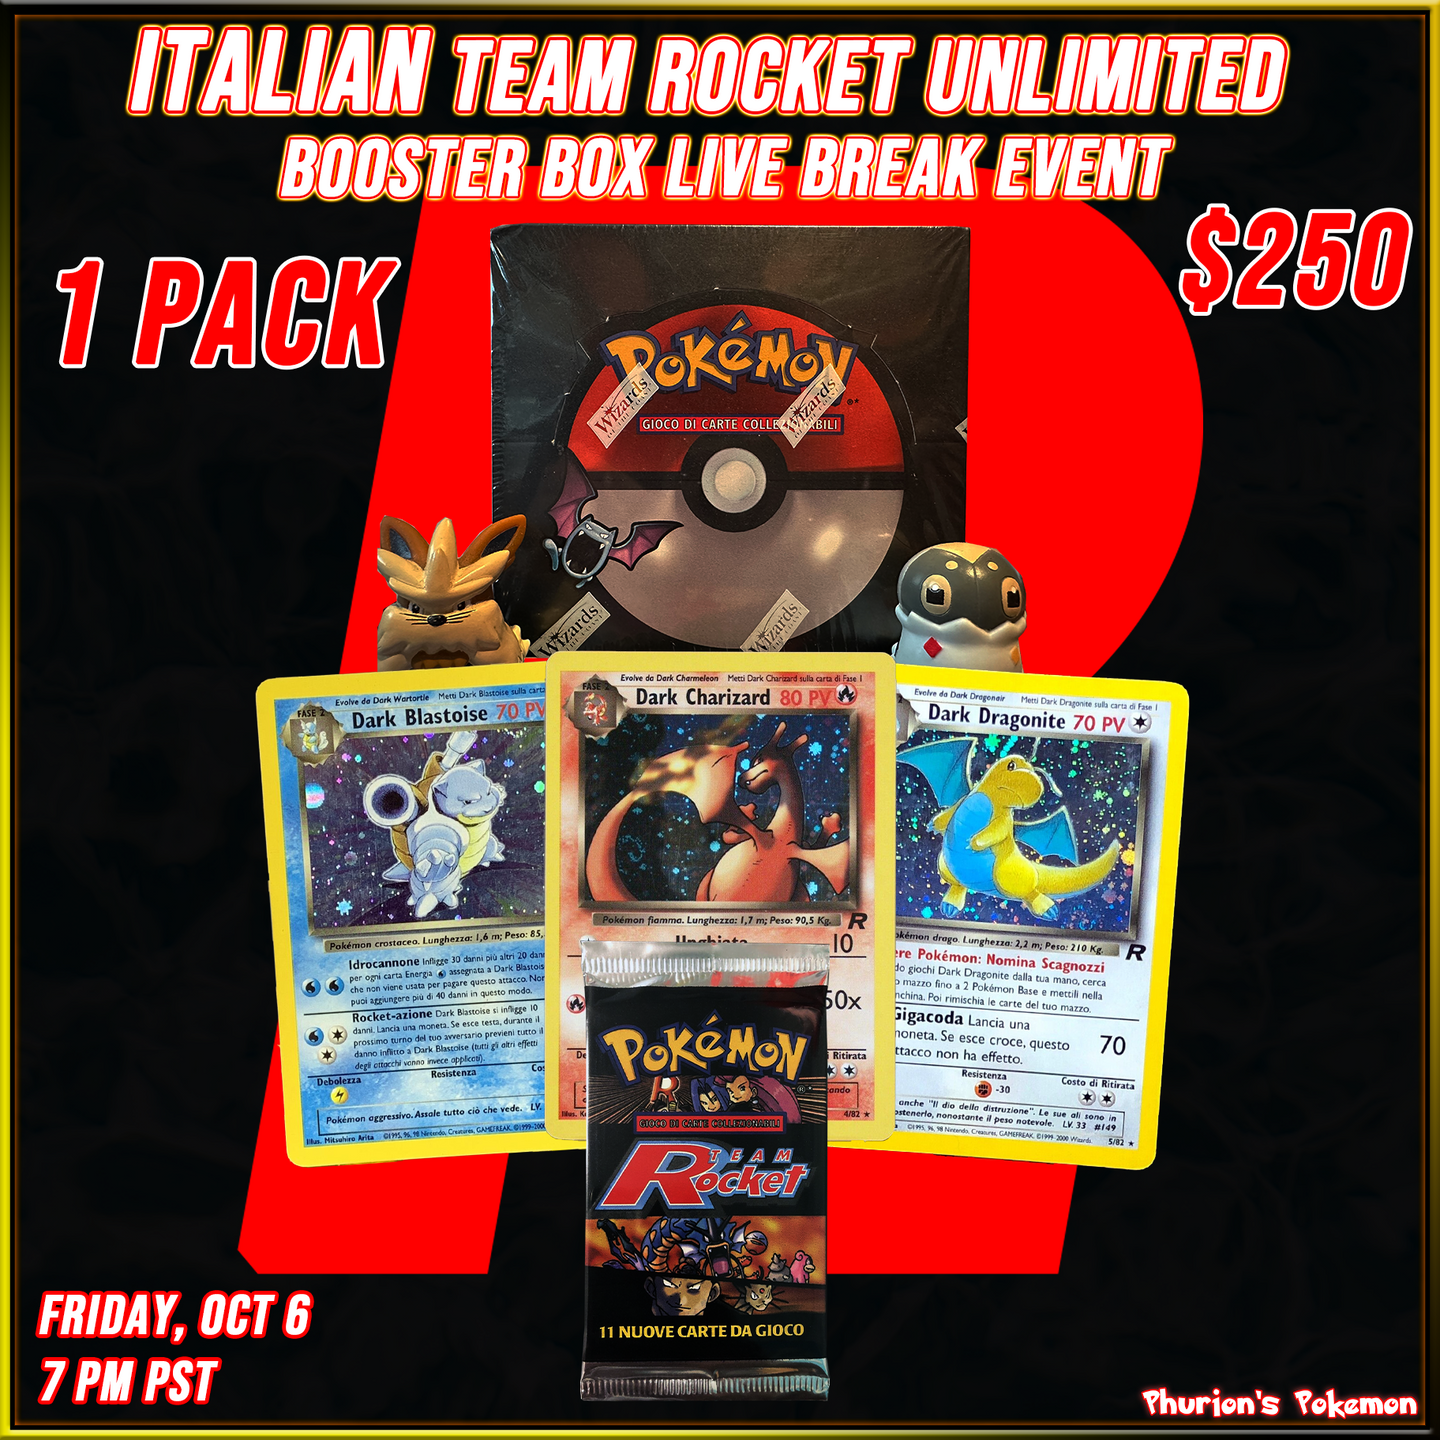 VINTAGE BOX BREAK EVENT 10/6 - ITALIAN Team Rocket Unlimited (Personal Break)